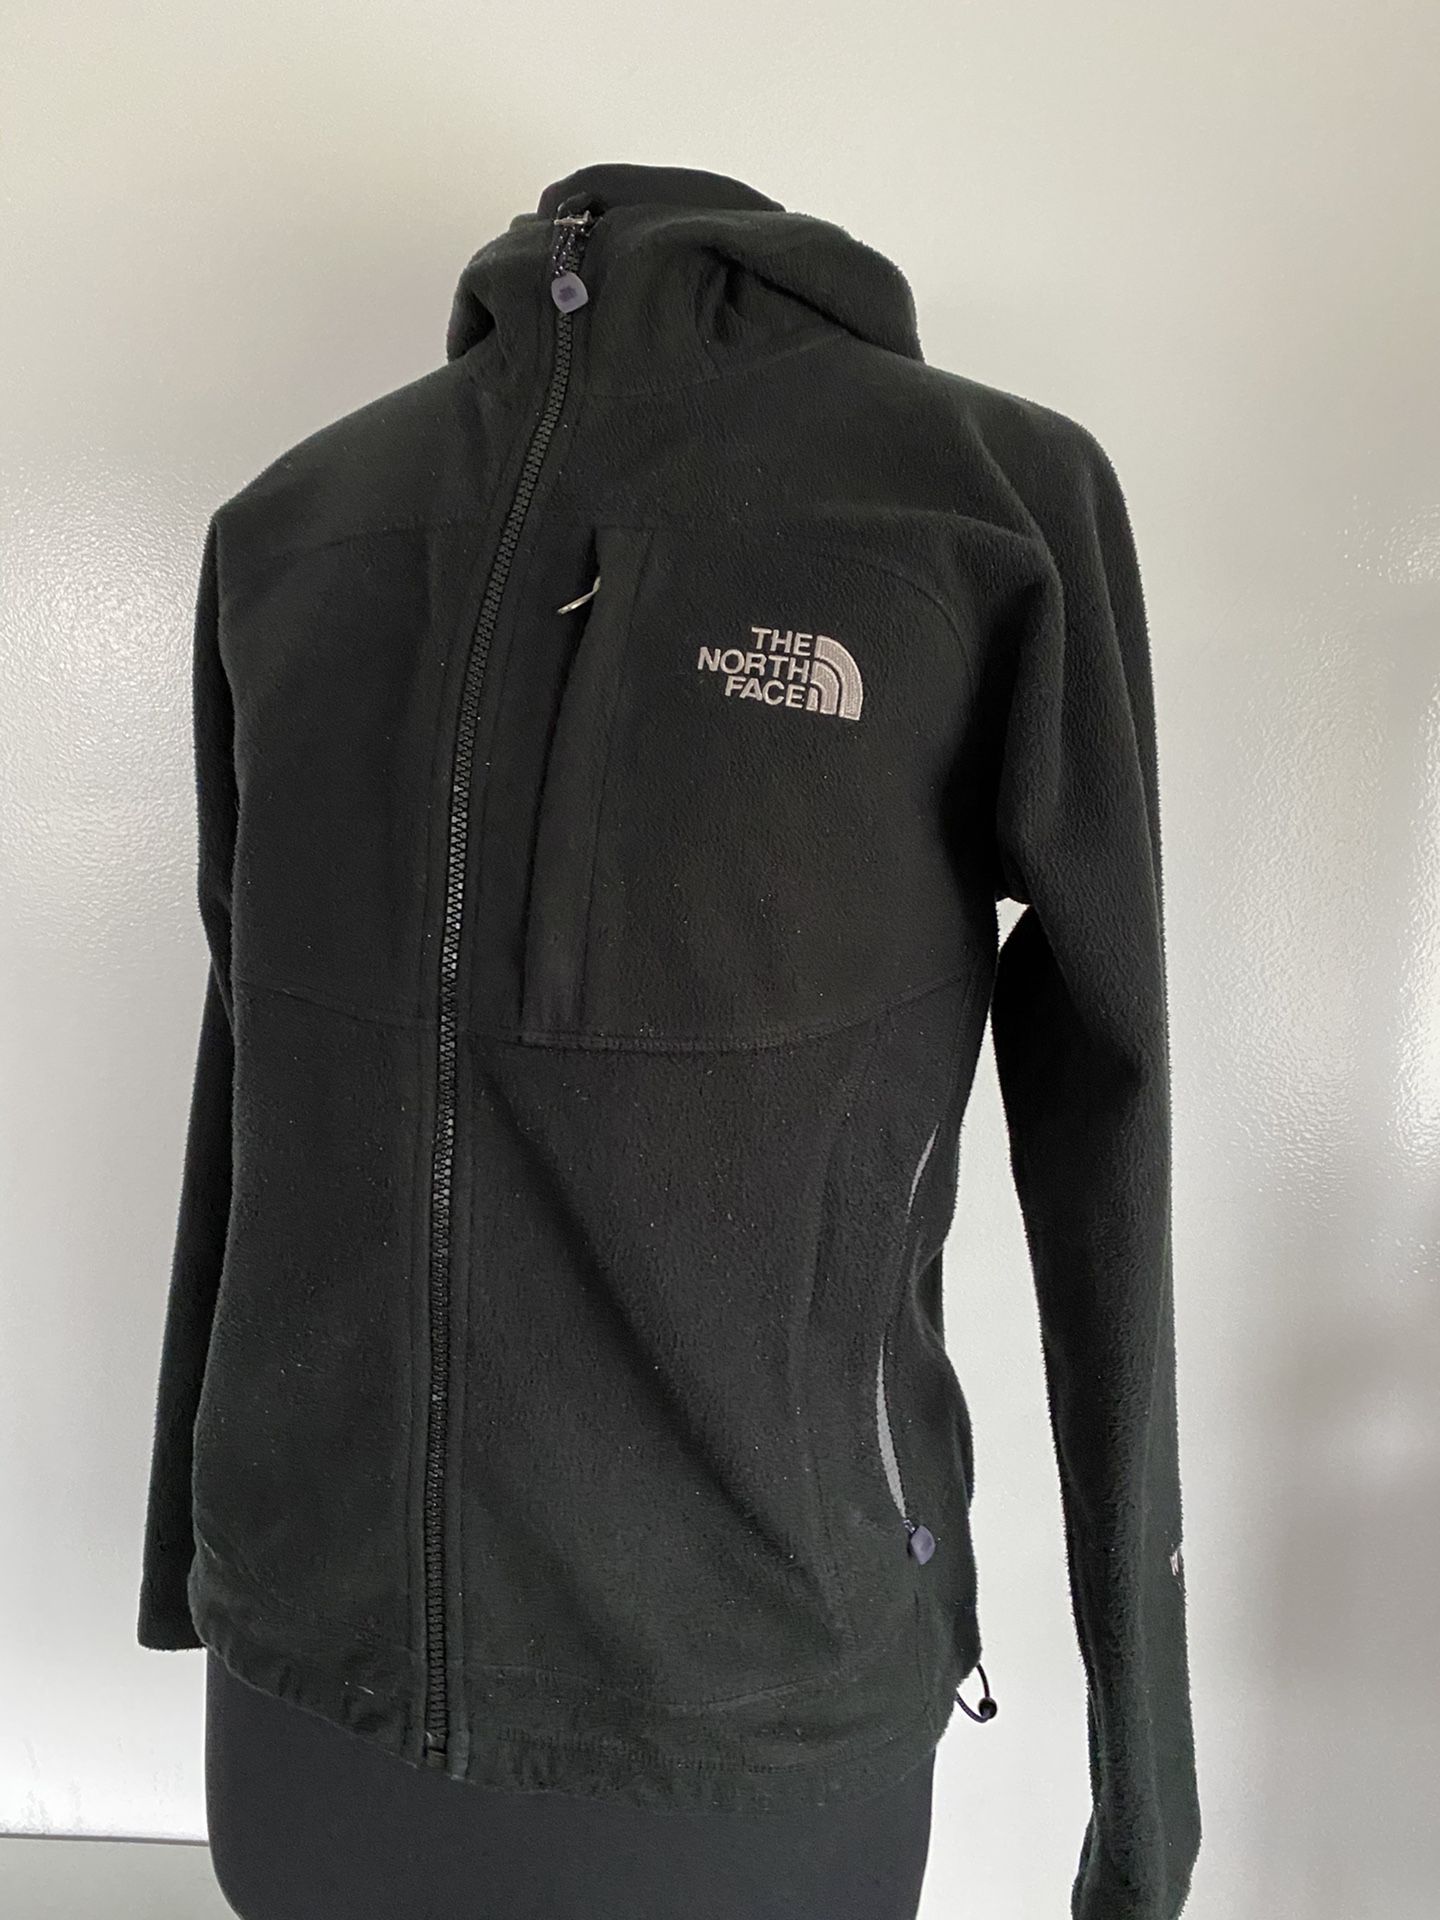 The North Face windbreaker hooded jacket, Size Women’s S